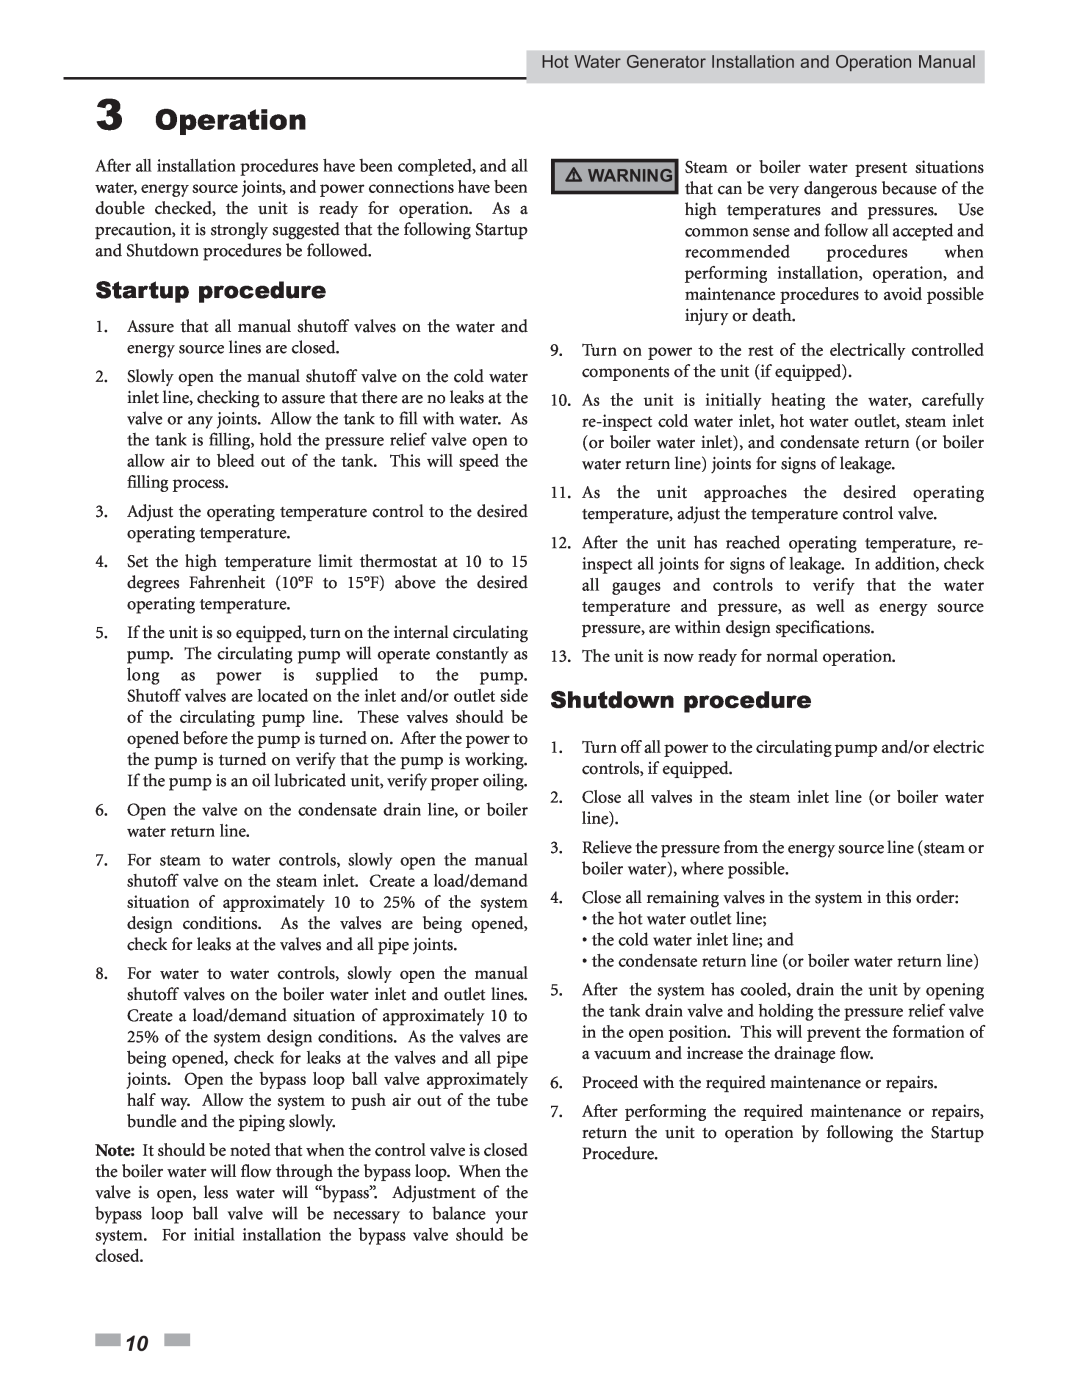 Lochinvar Hot Water Generator operation manual 3Operation, Startup procedure, Shutdown procedure 